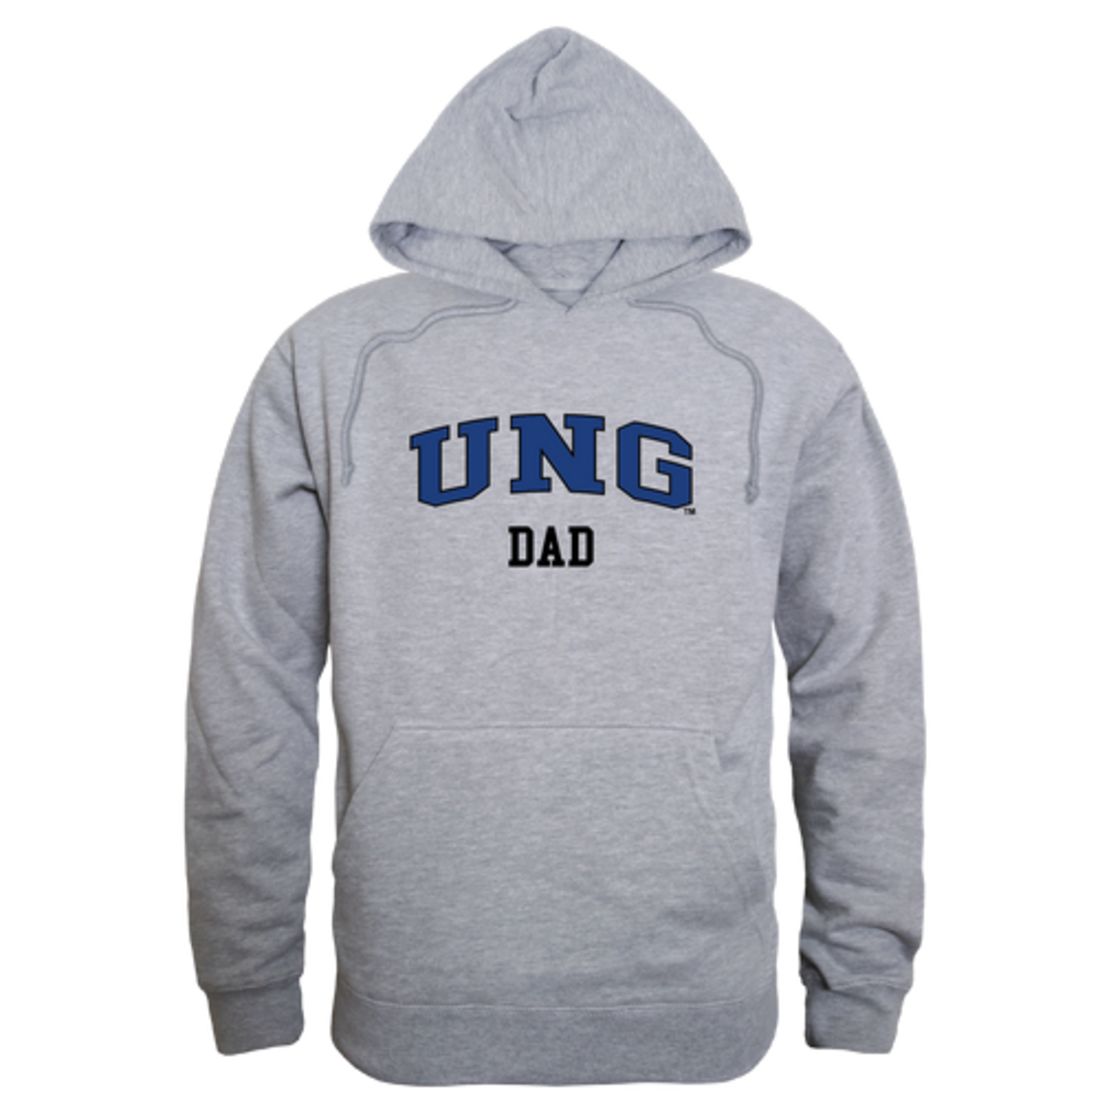 University-of-North-Georgia-Nighthawks-Dad-Fleece-Hoodie-Sweatshirts